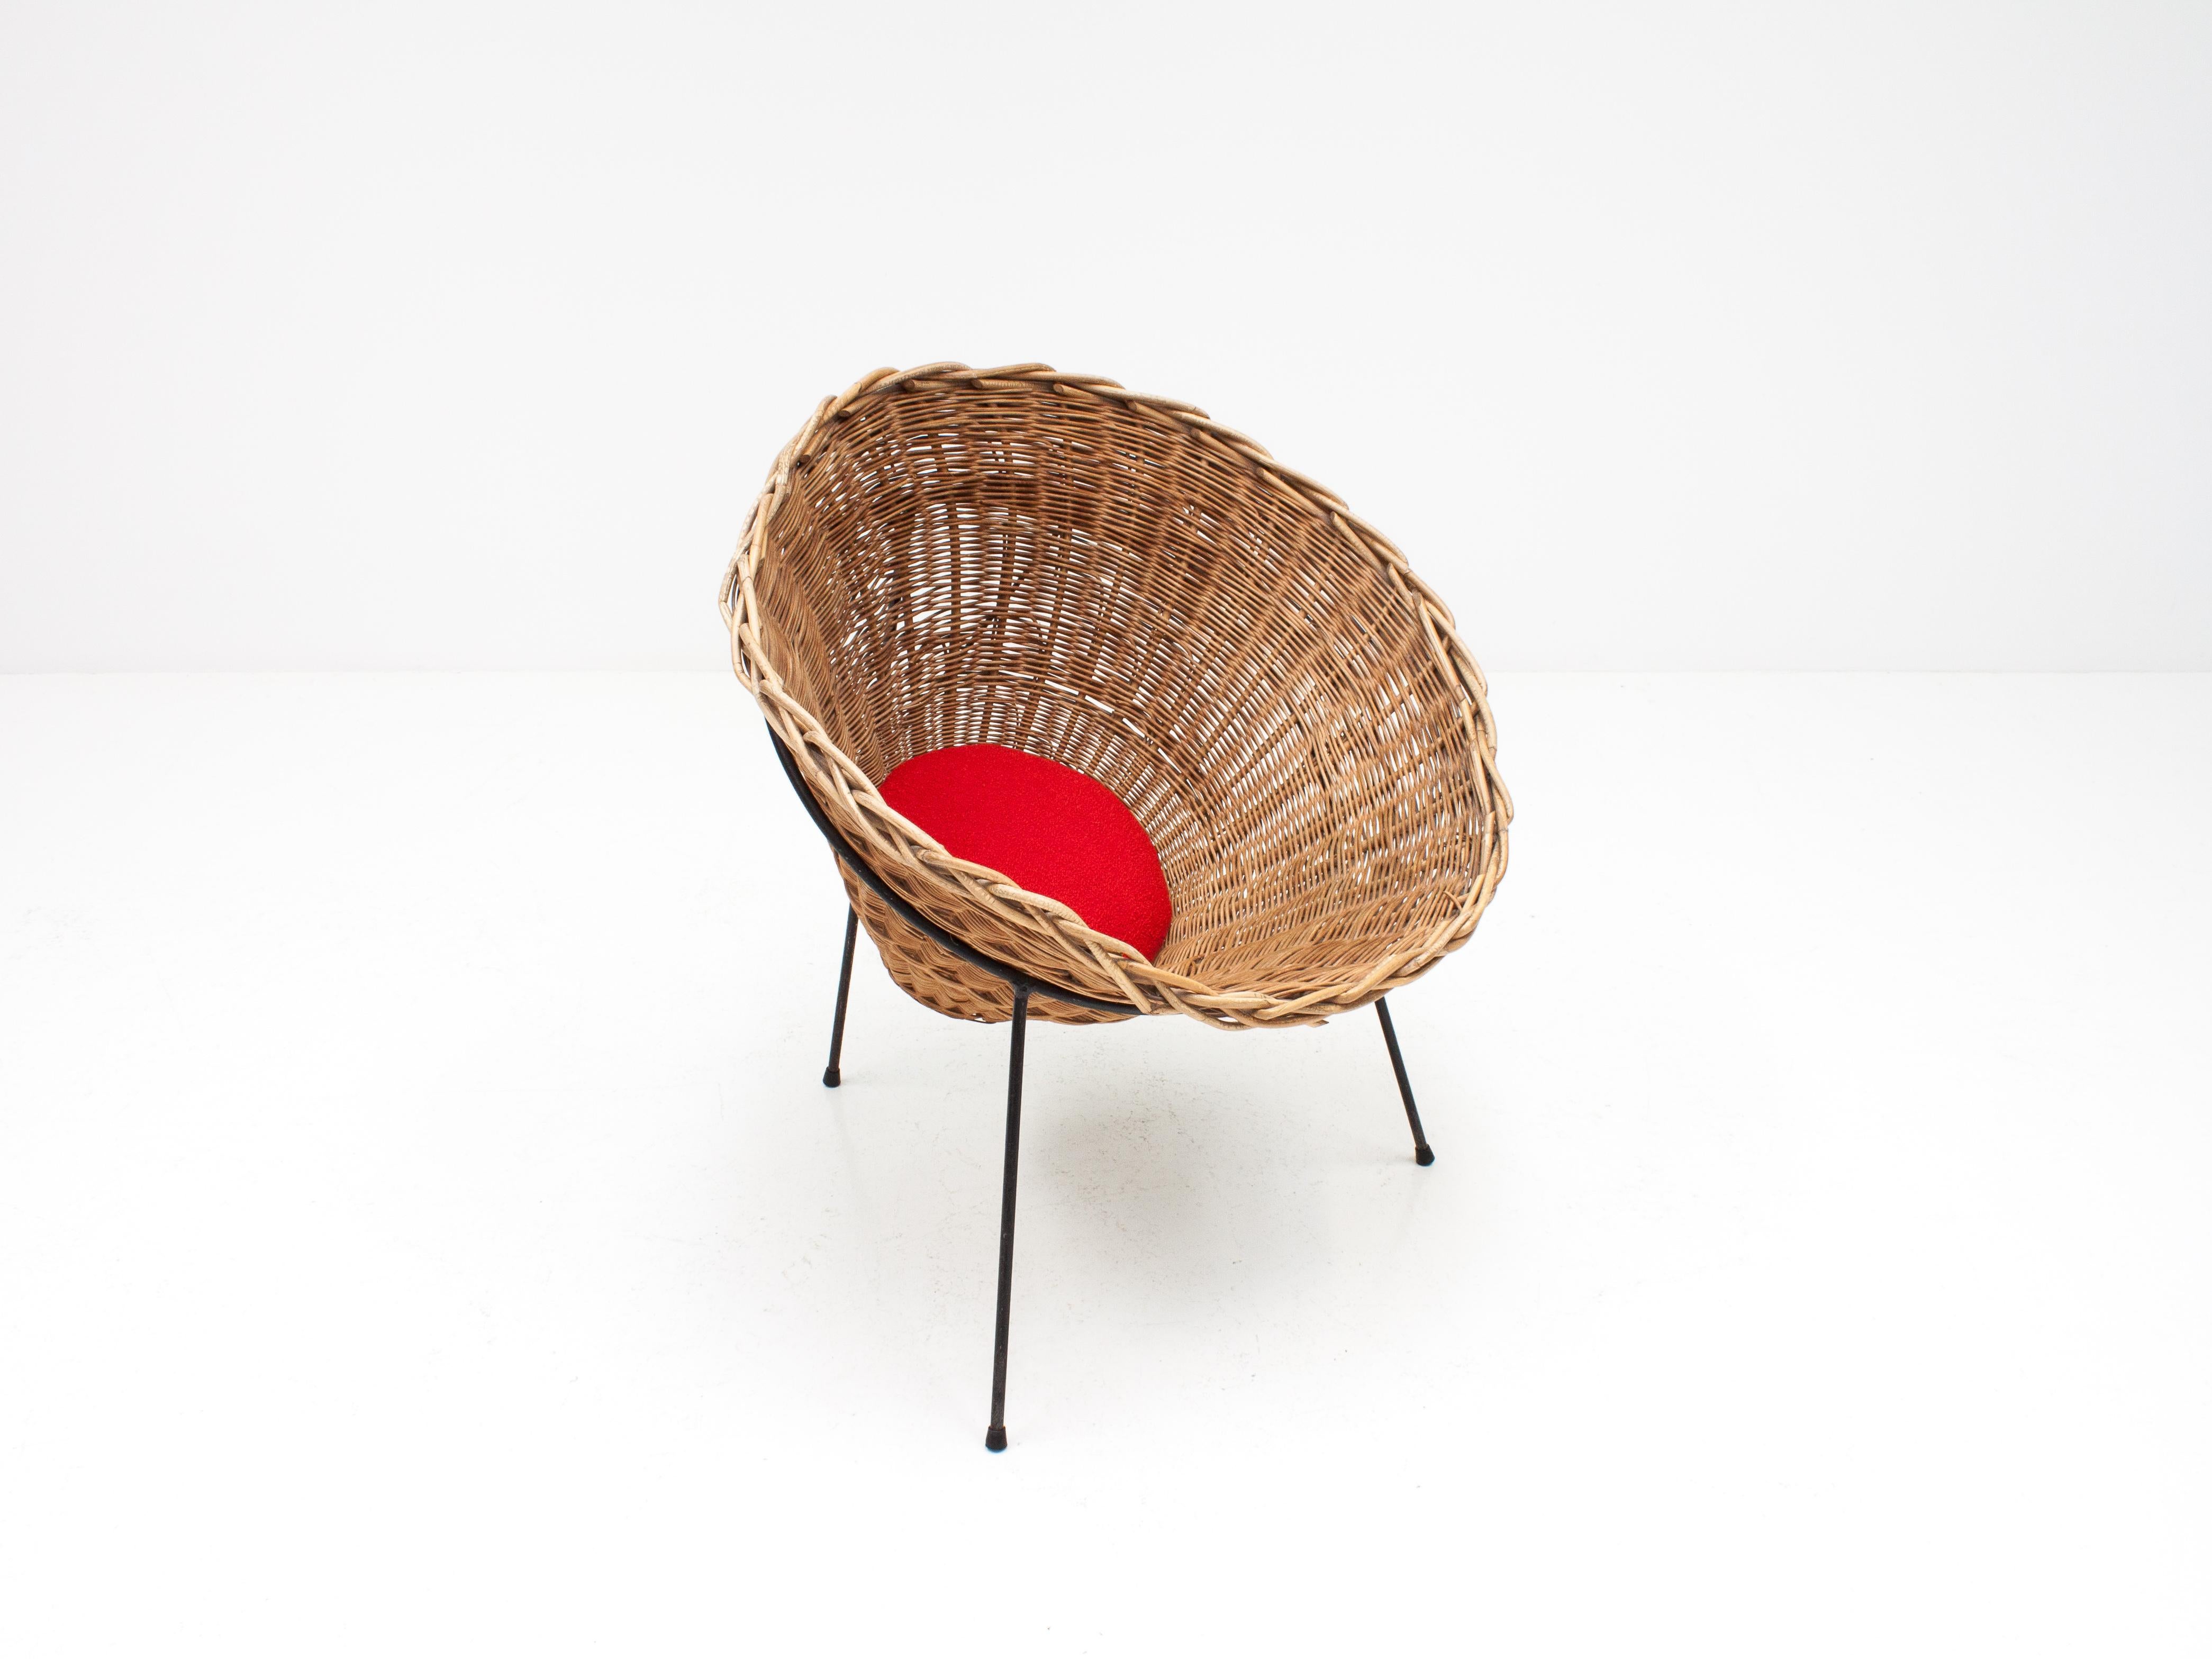 Fabric Terence Conran C8 Cone Chair, Conran Furniture, England, 1954